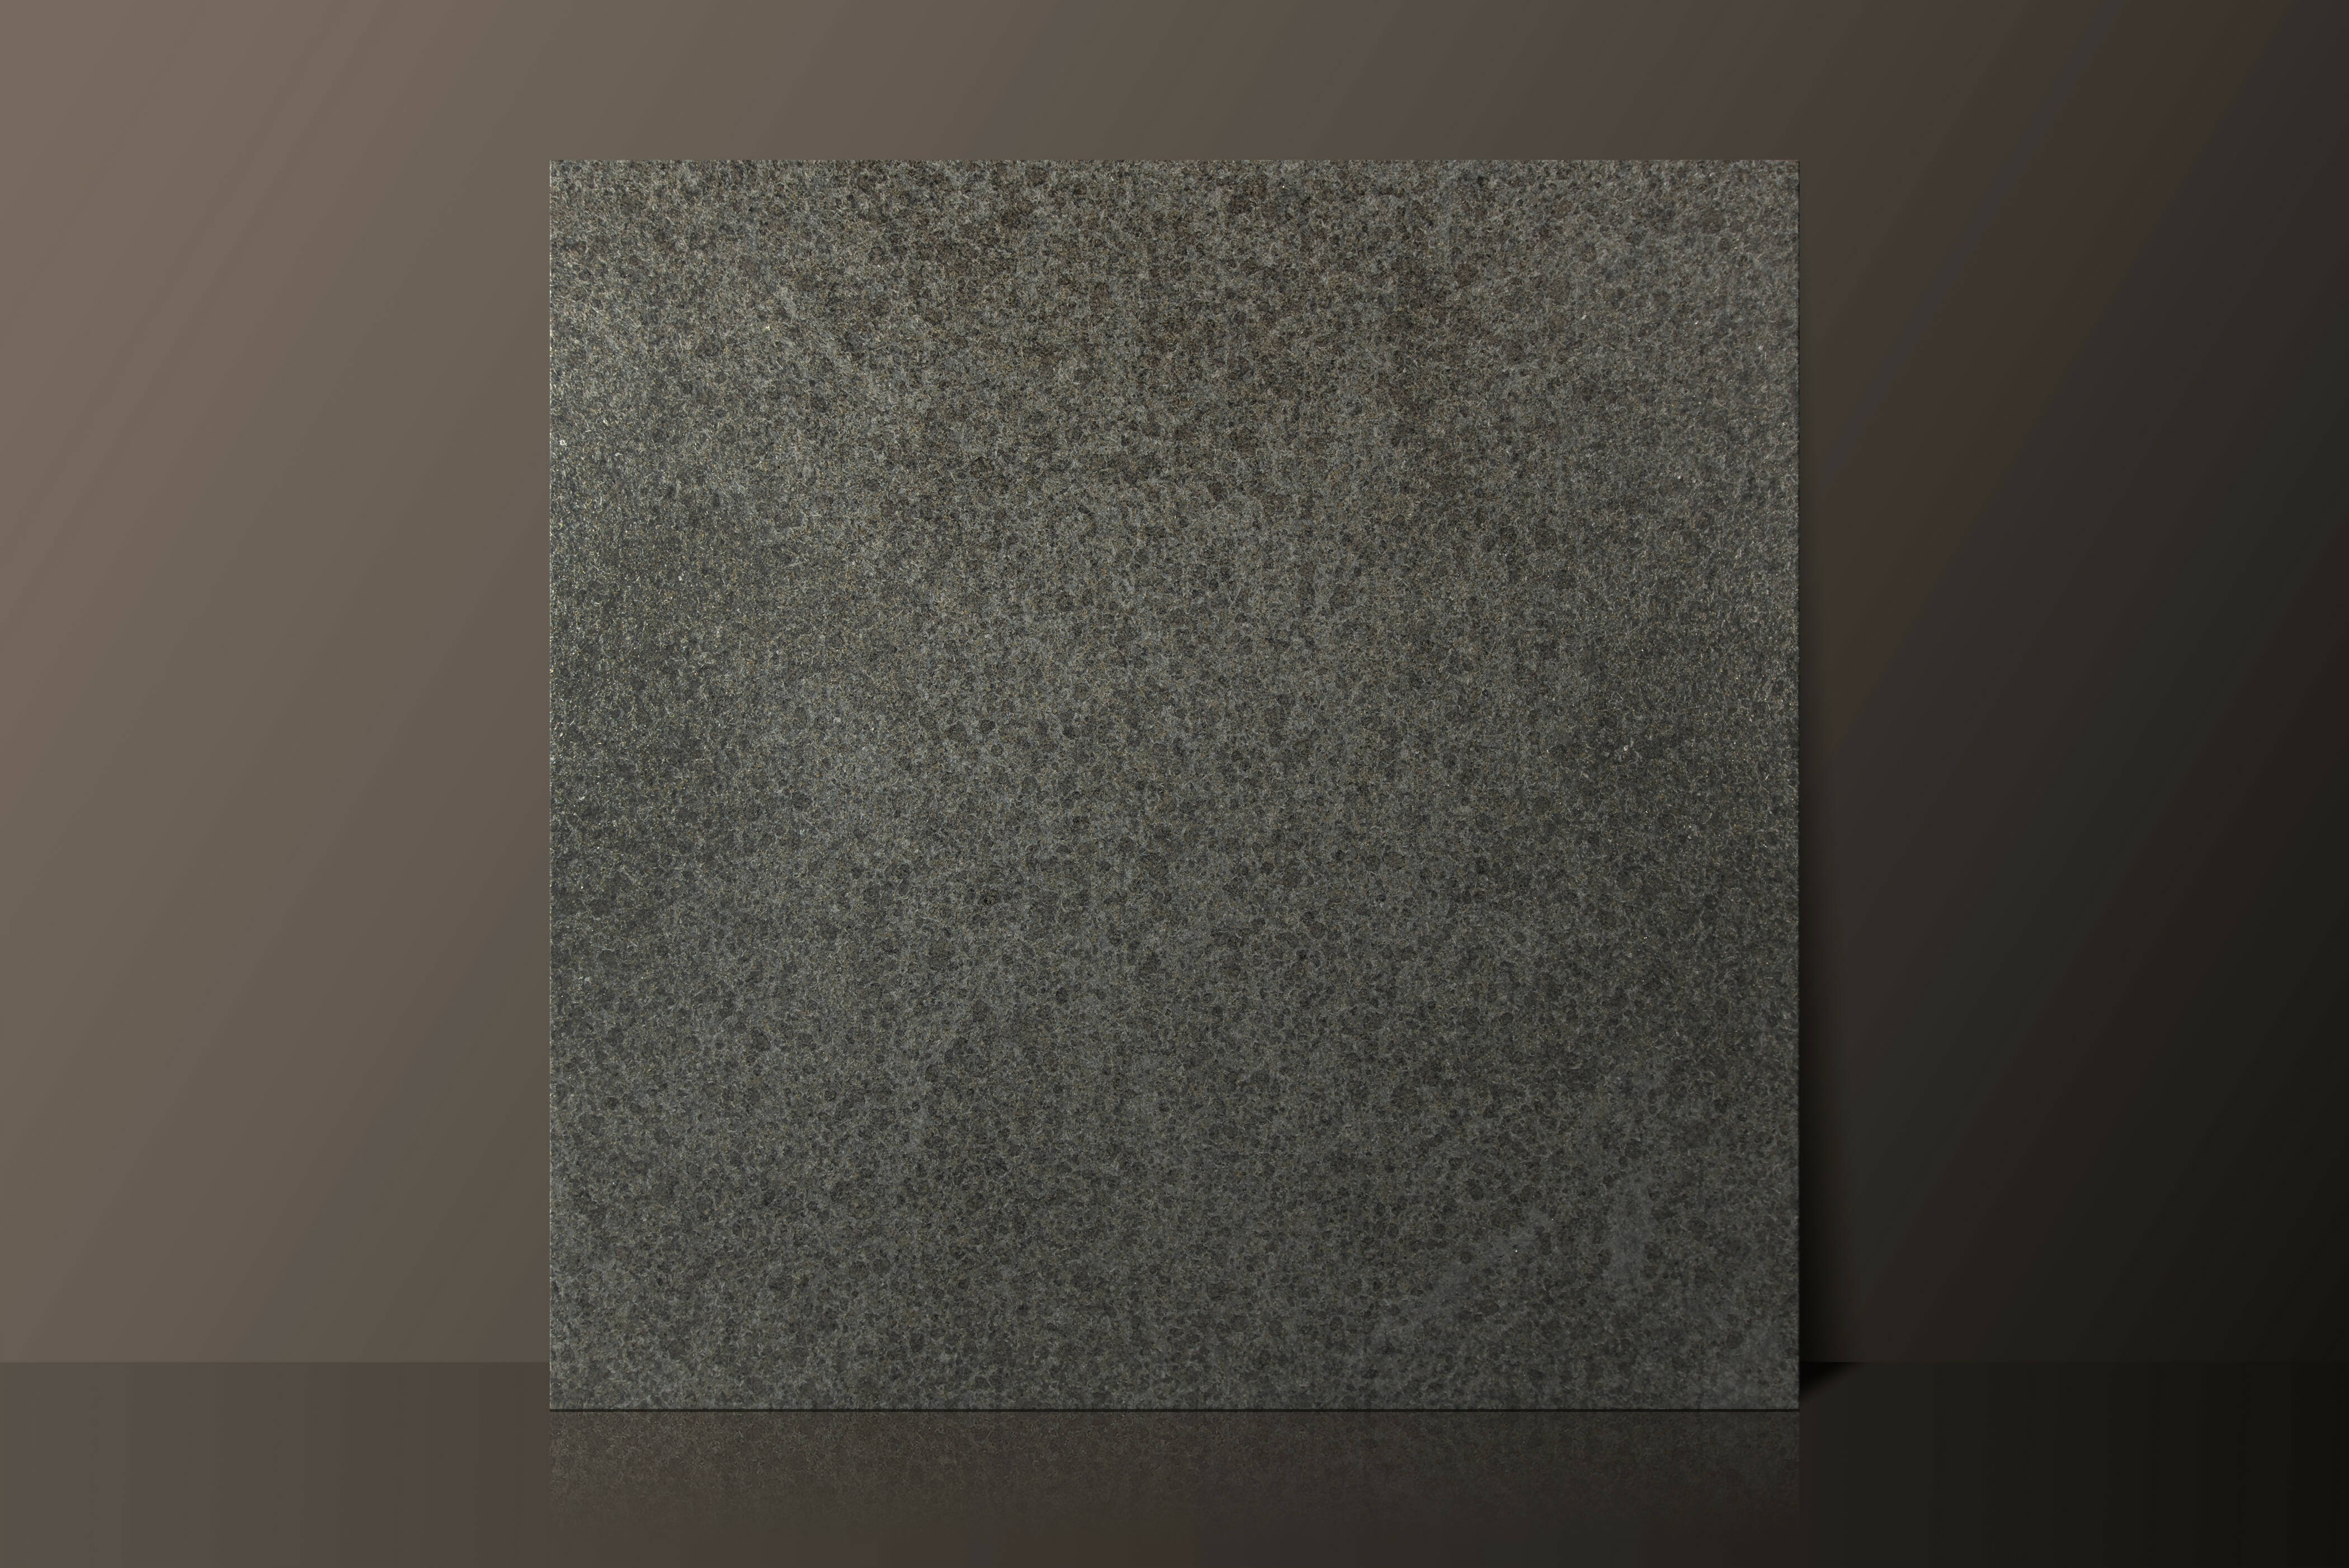 BERRY BLACK GRANITE TILE,Tiles-Granite,Sonic Stone Tiles,www.work-tops.com